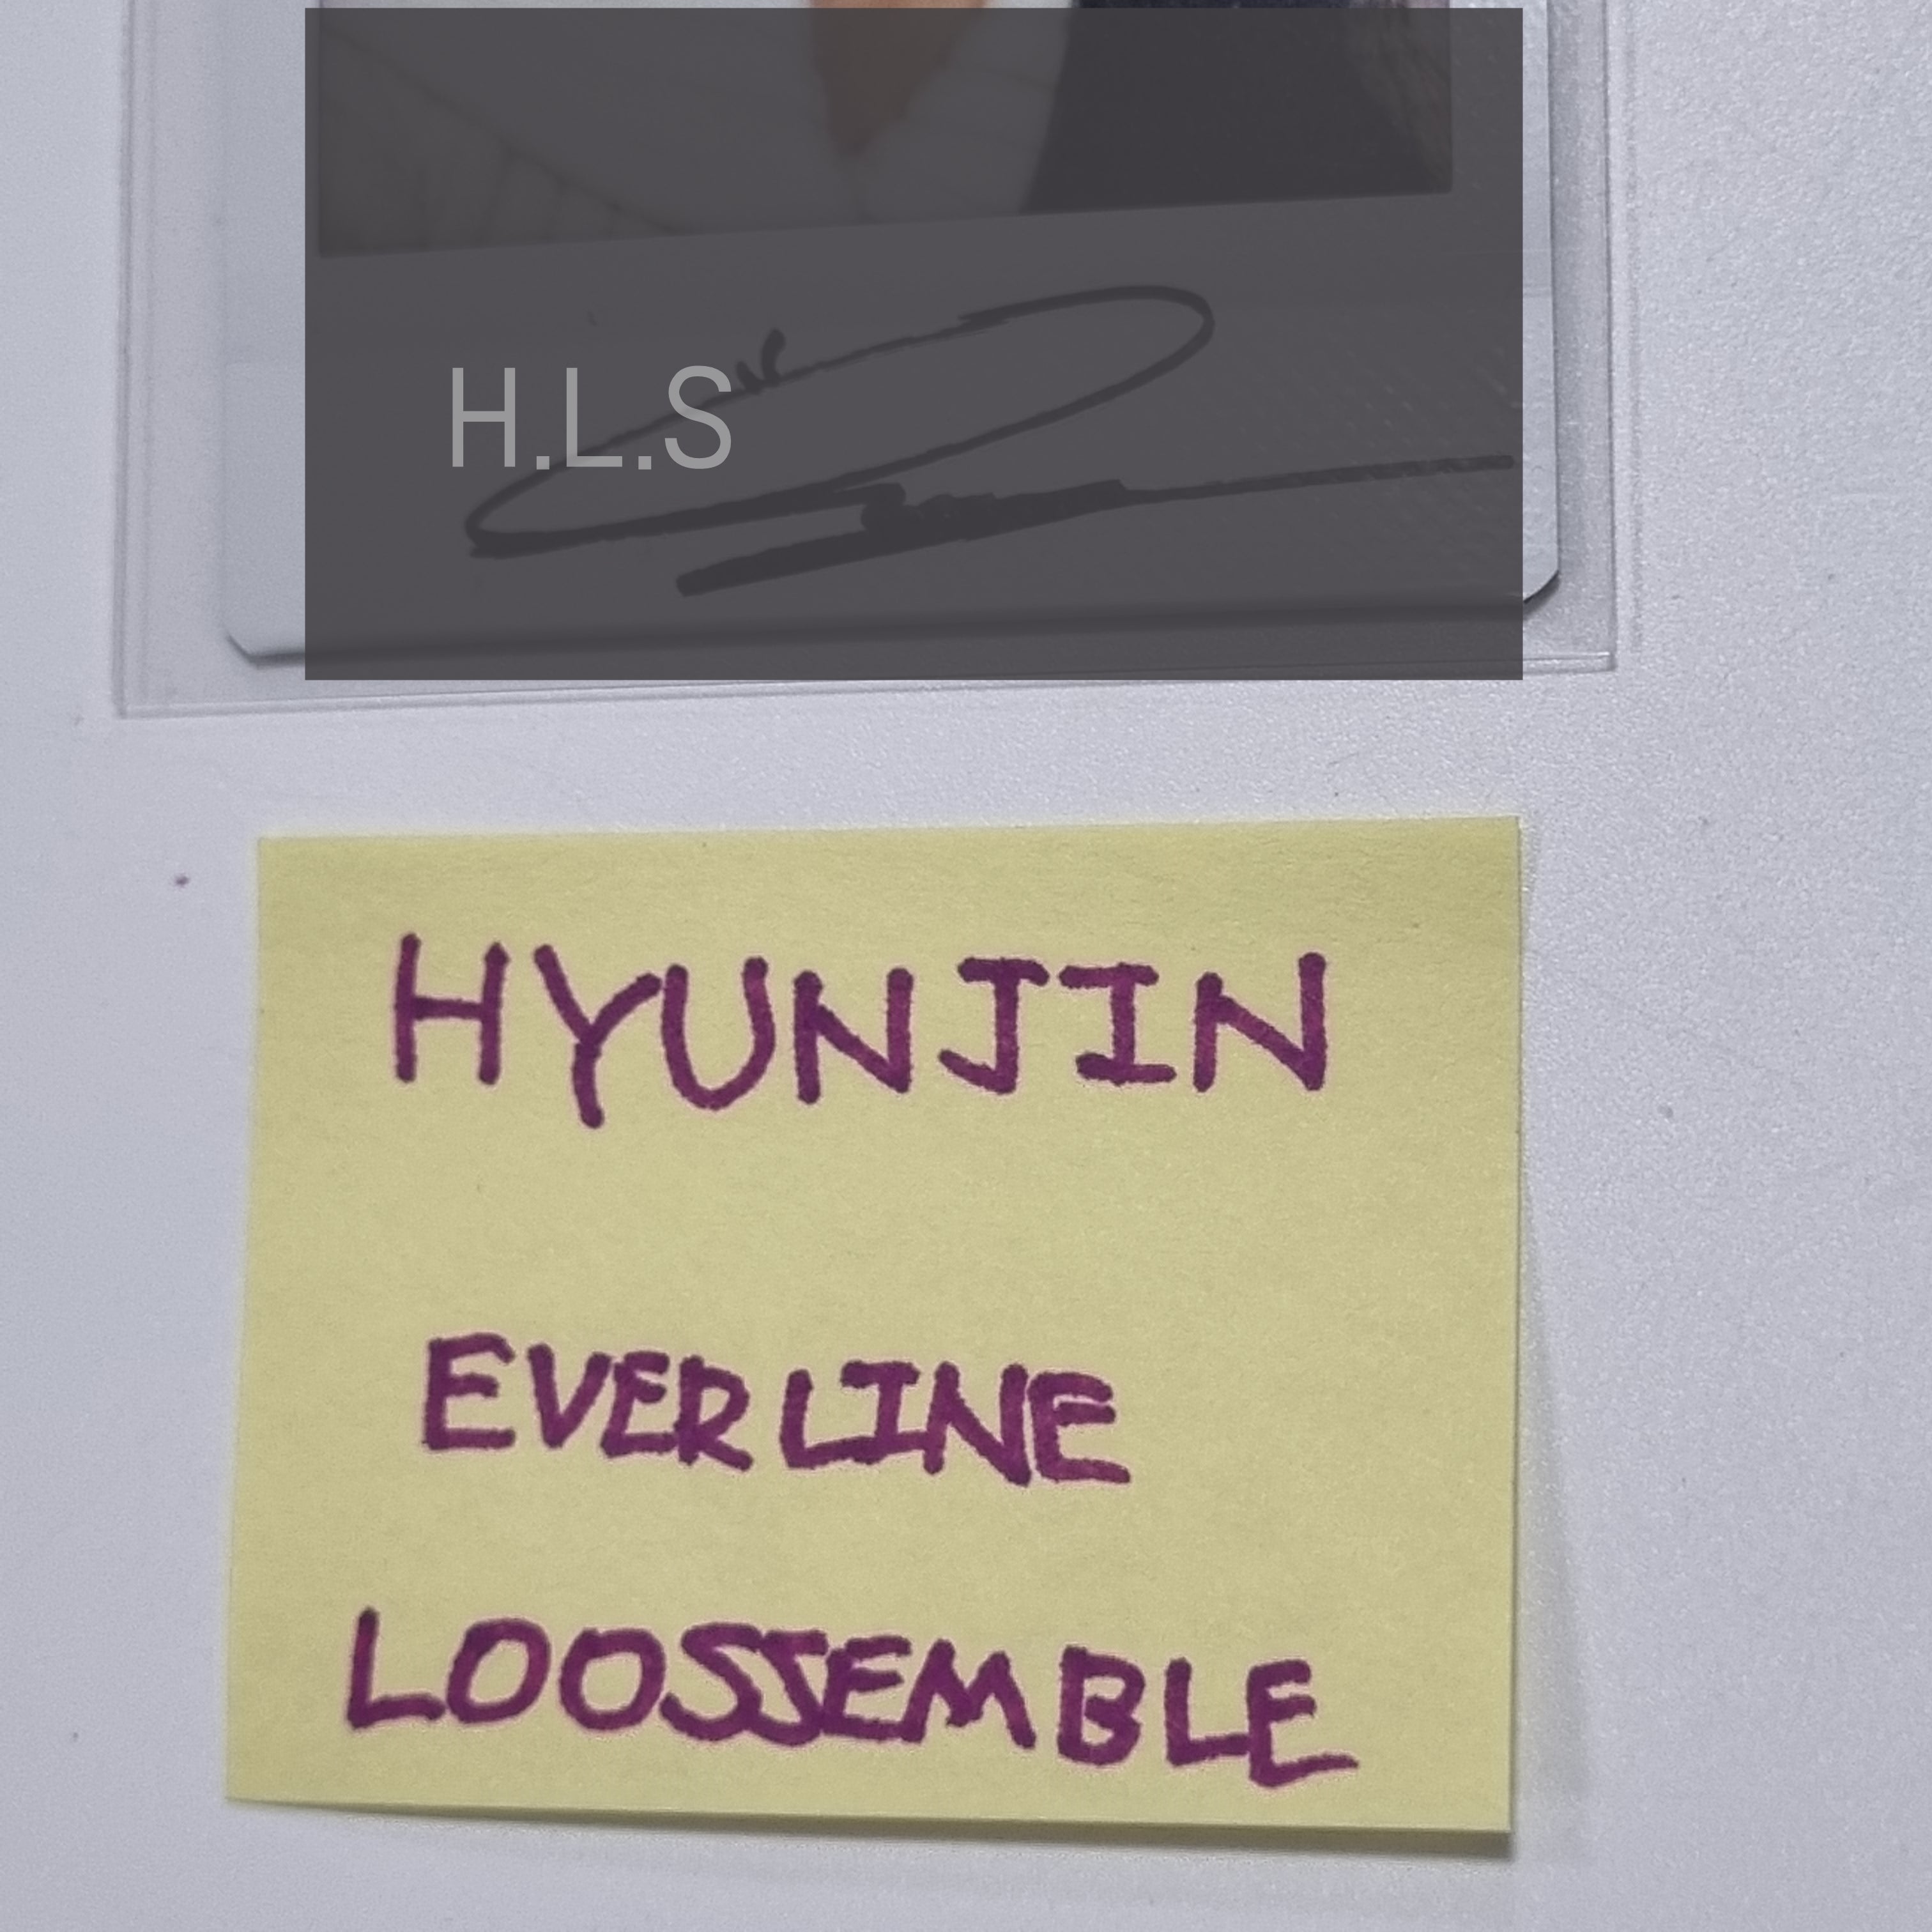 Hyunjin (Of Loossemble) 